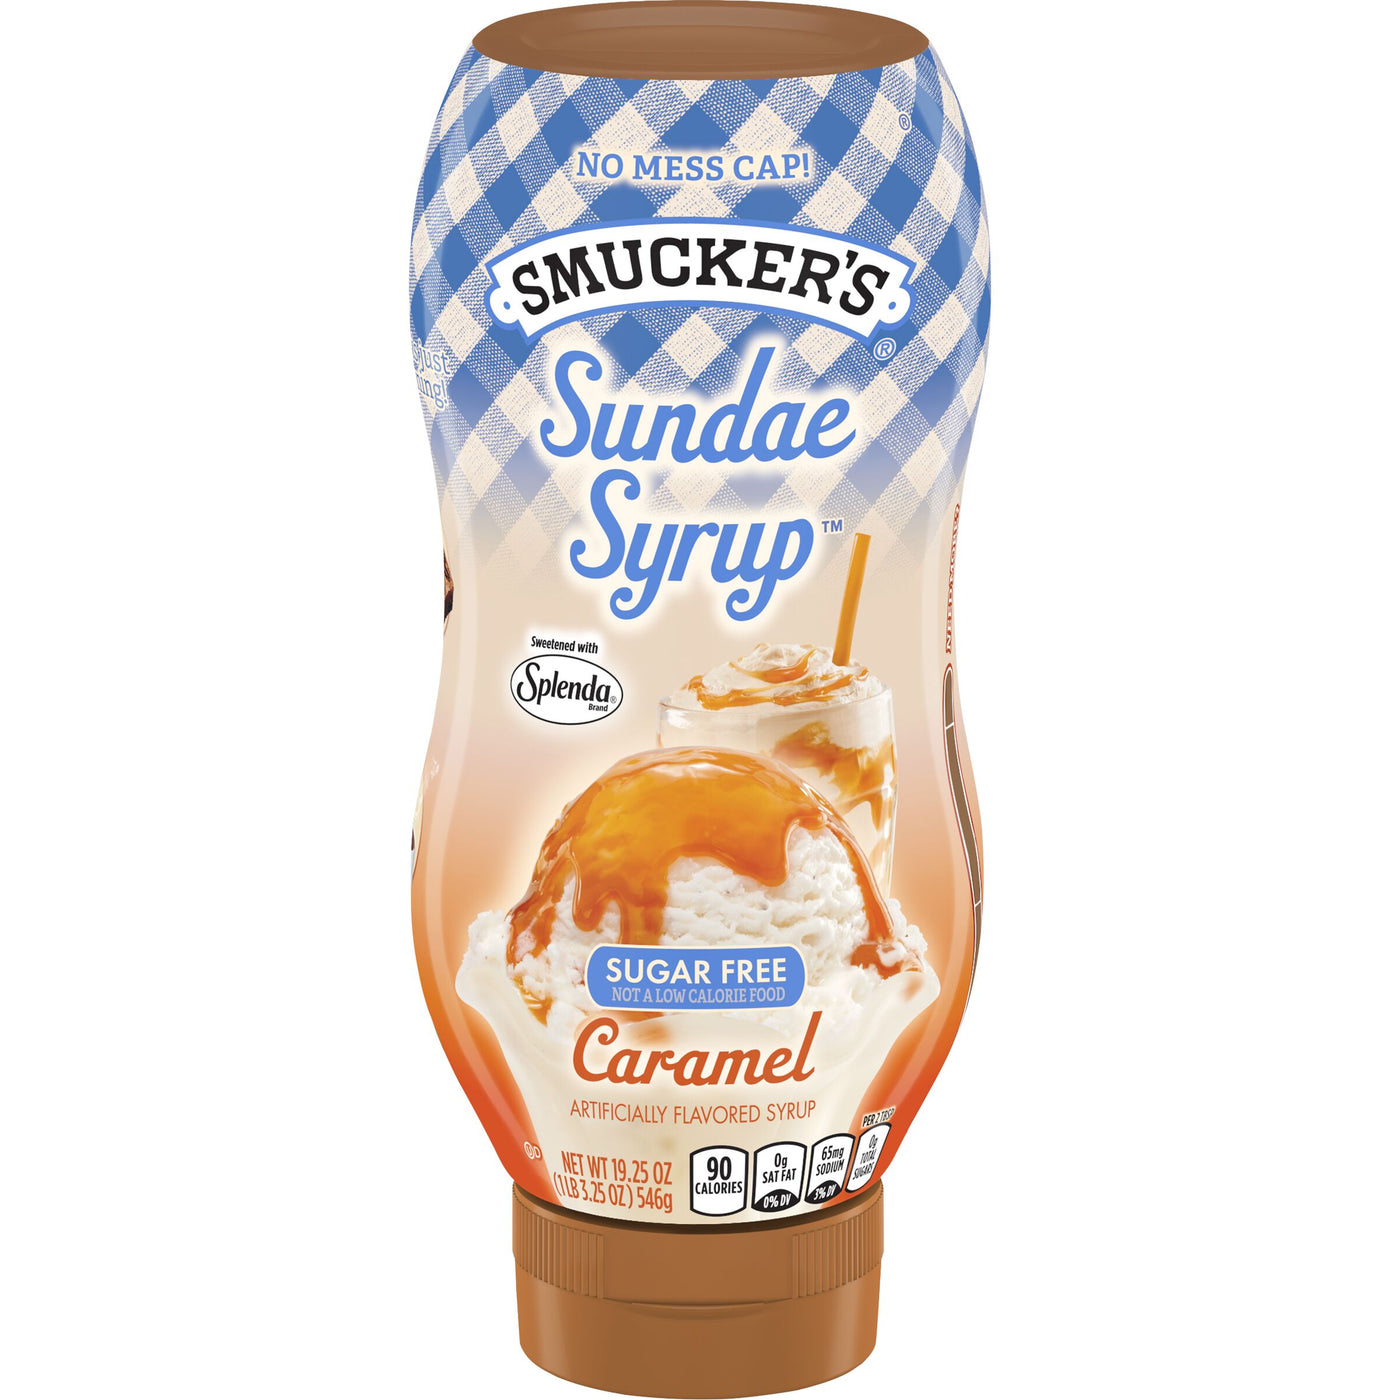 Smucker's Sundae Syrup Sugar Free Caramel Flavored Syrup, 19.25 oz